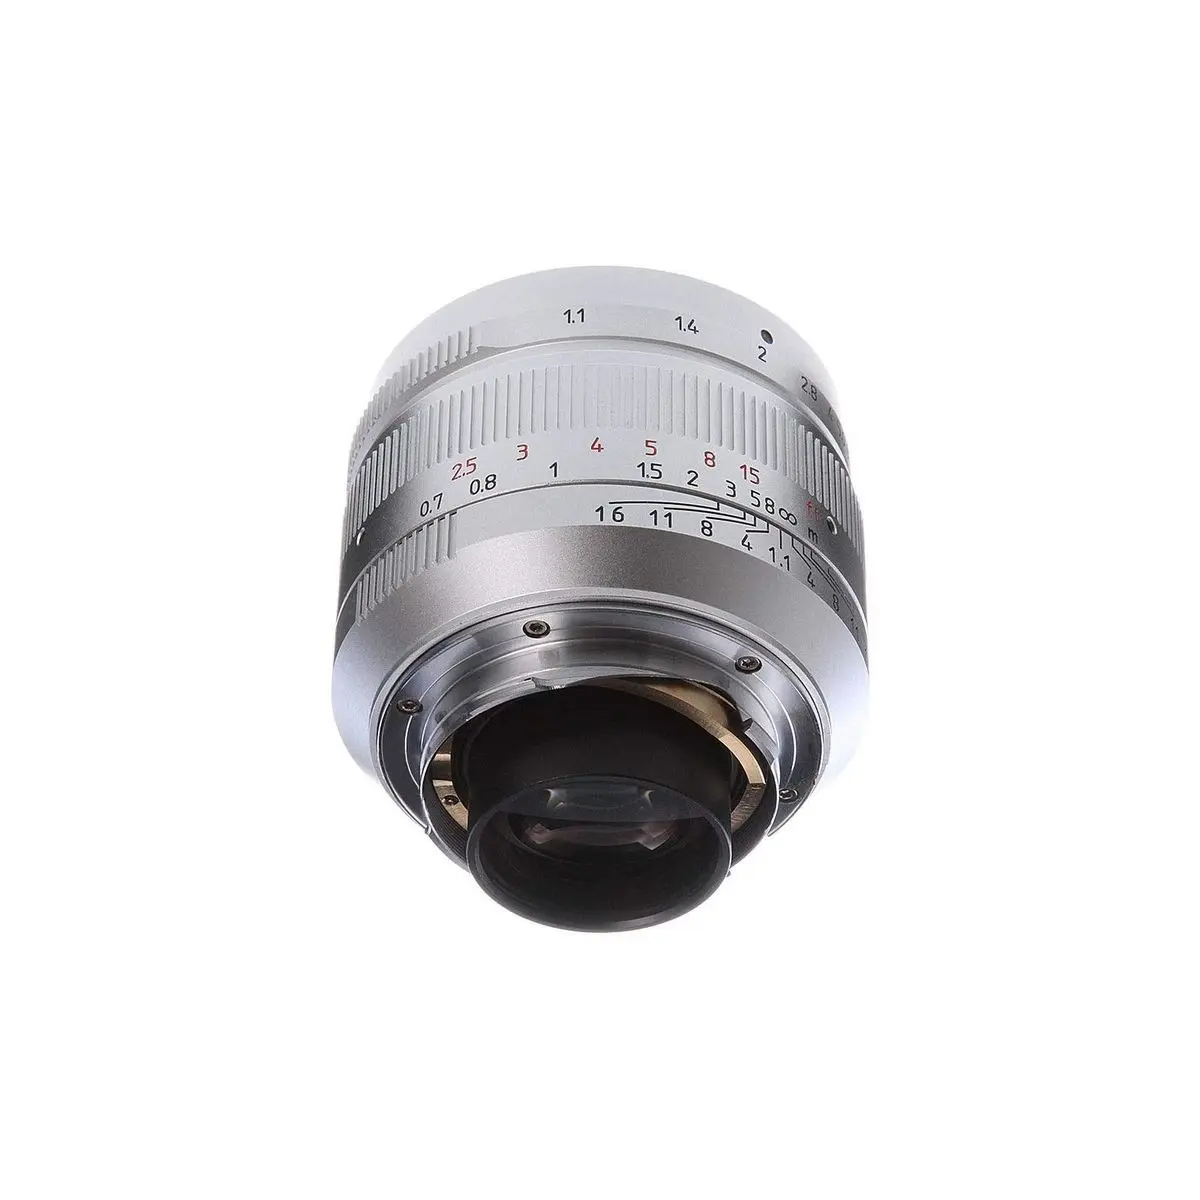 2. 7Artisans 50mm F1.1 (TL/SL) Silver (A402S) Lens